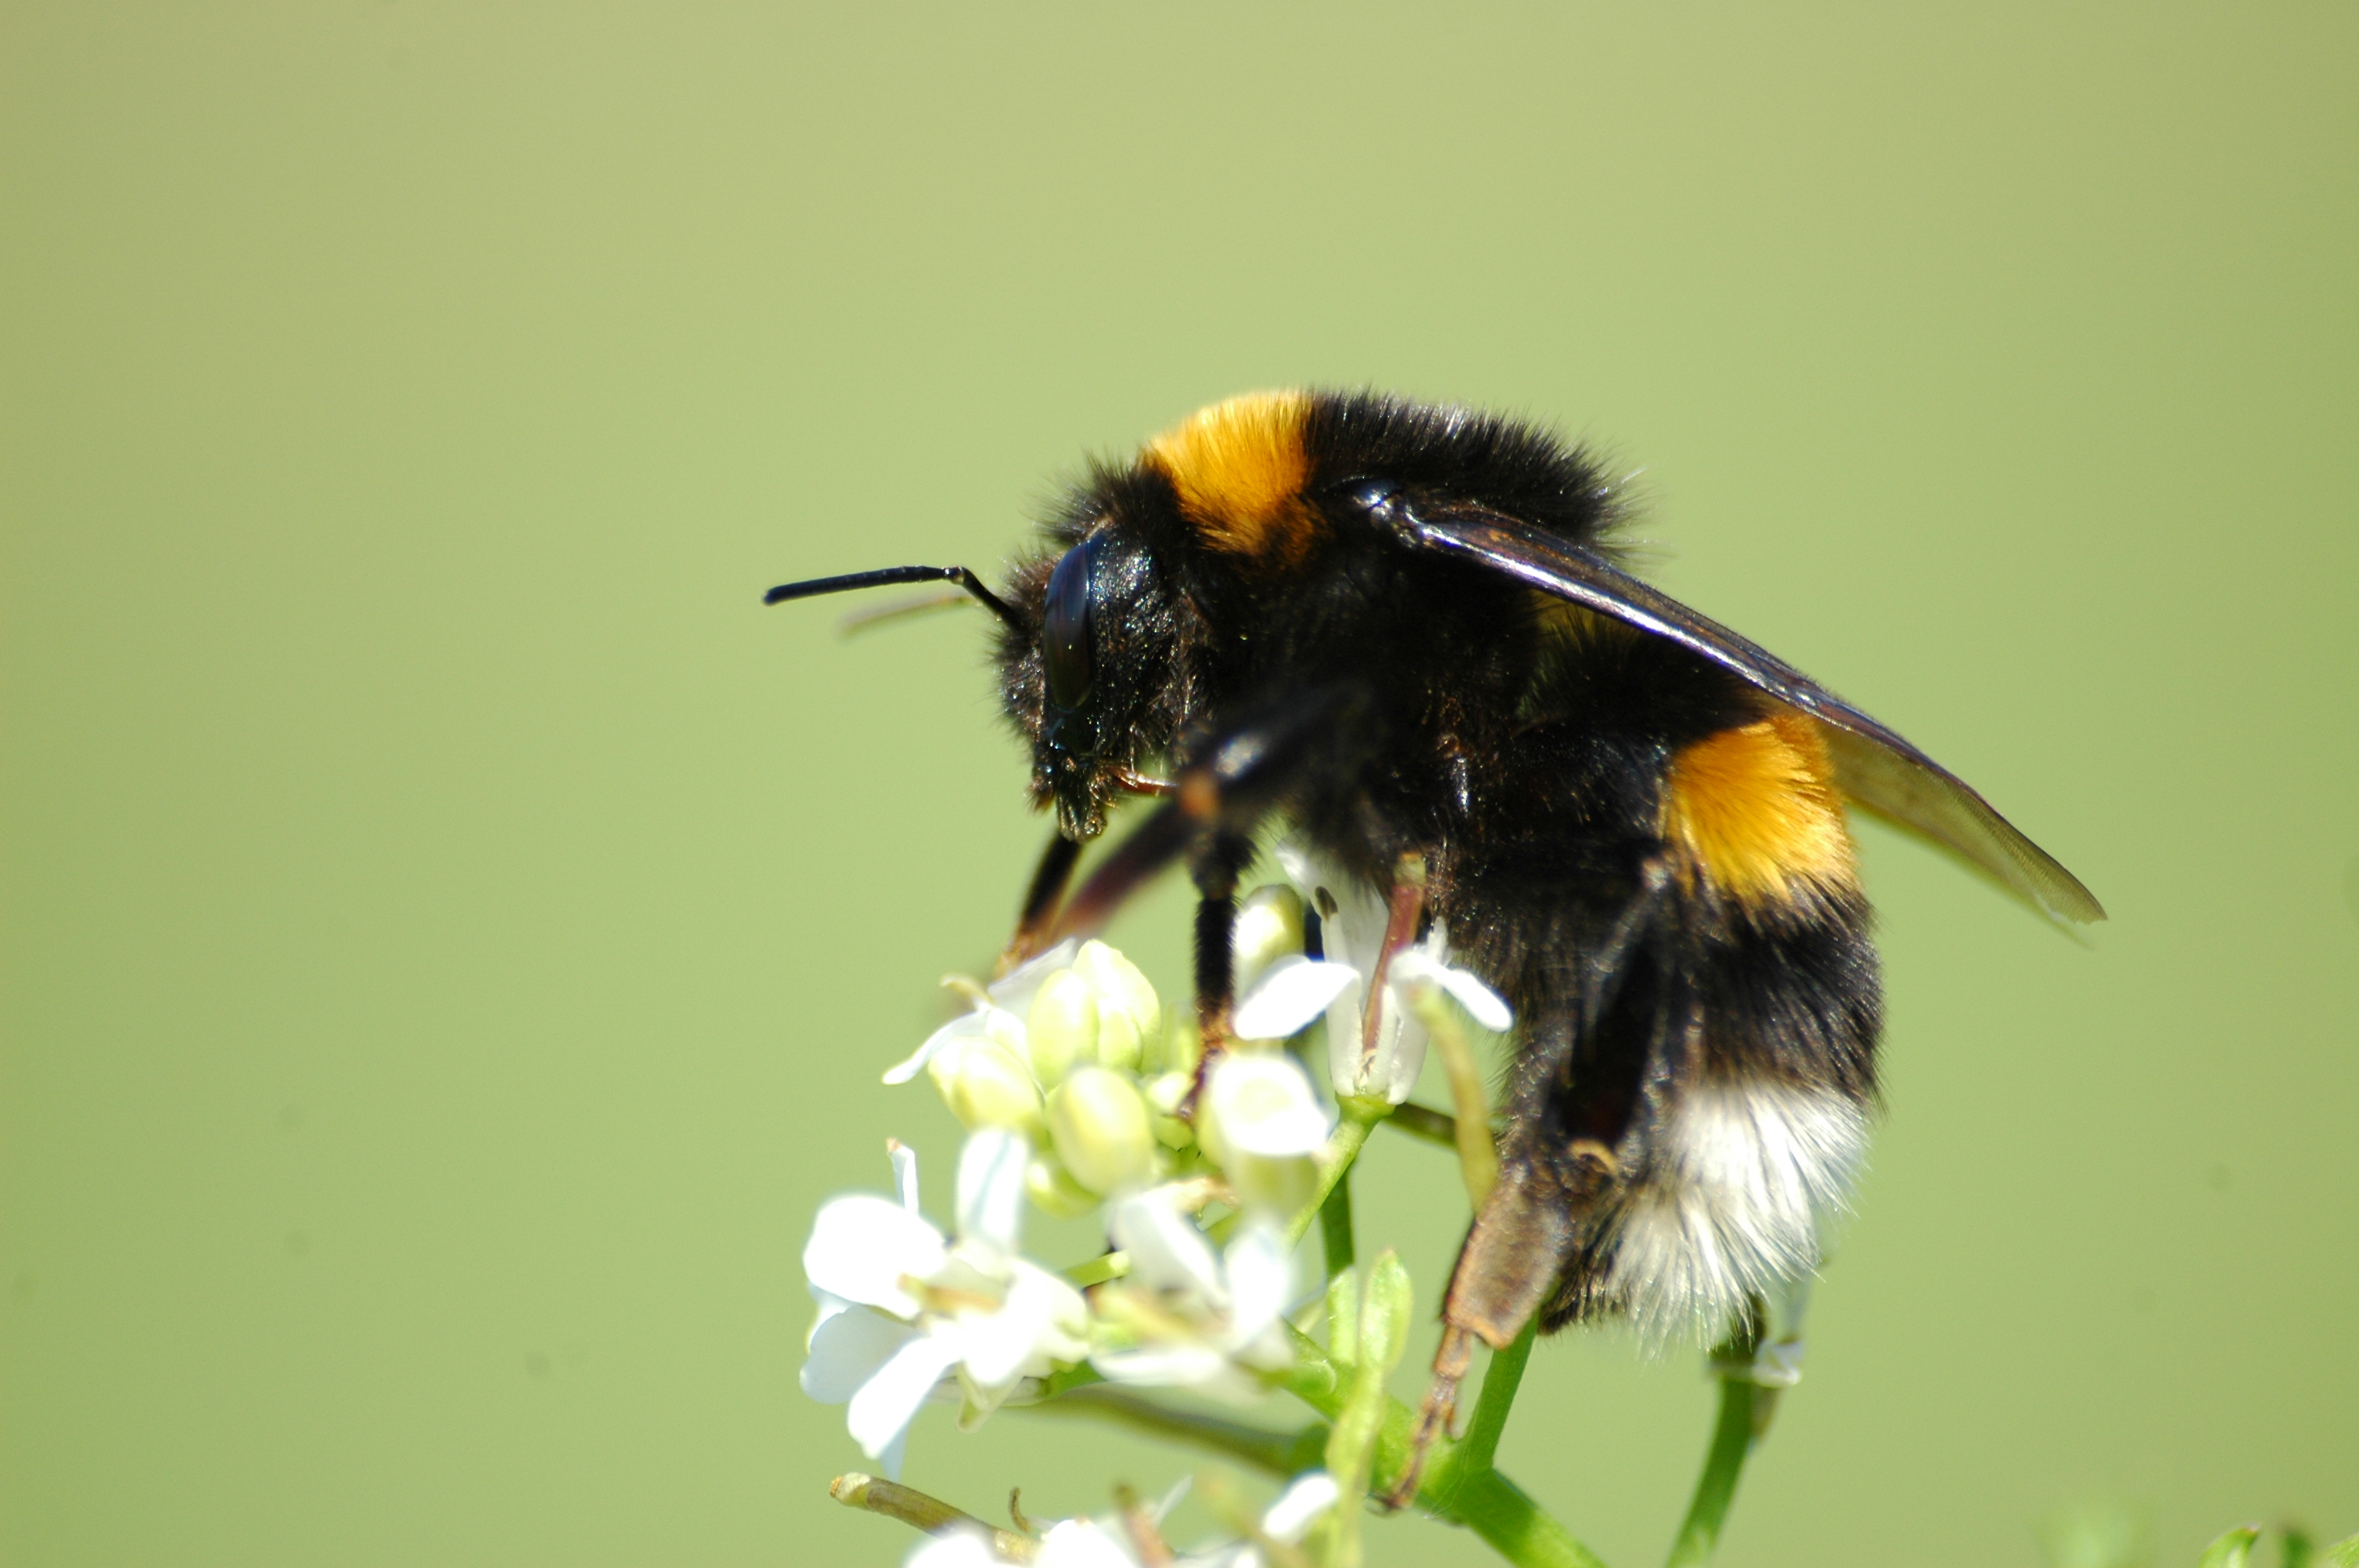 https://upload.wikimedia.org/wikipedia/commons/0/08/2010-04-28_%2835%29_Erdhummel%2C_Buff-tailed_bumblebee%2C_Bombus_terrestris.jpg